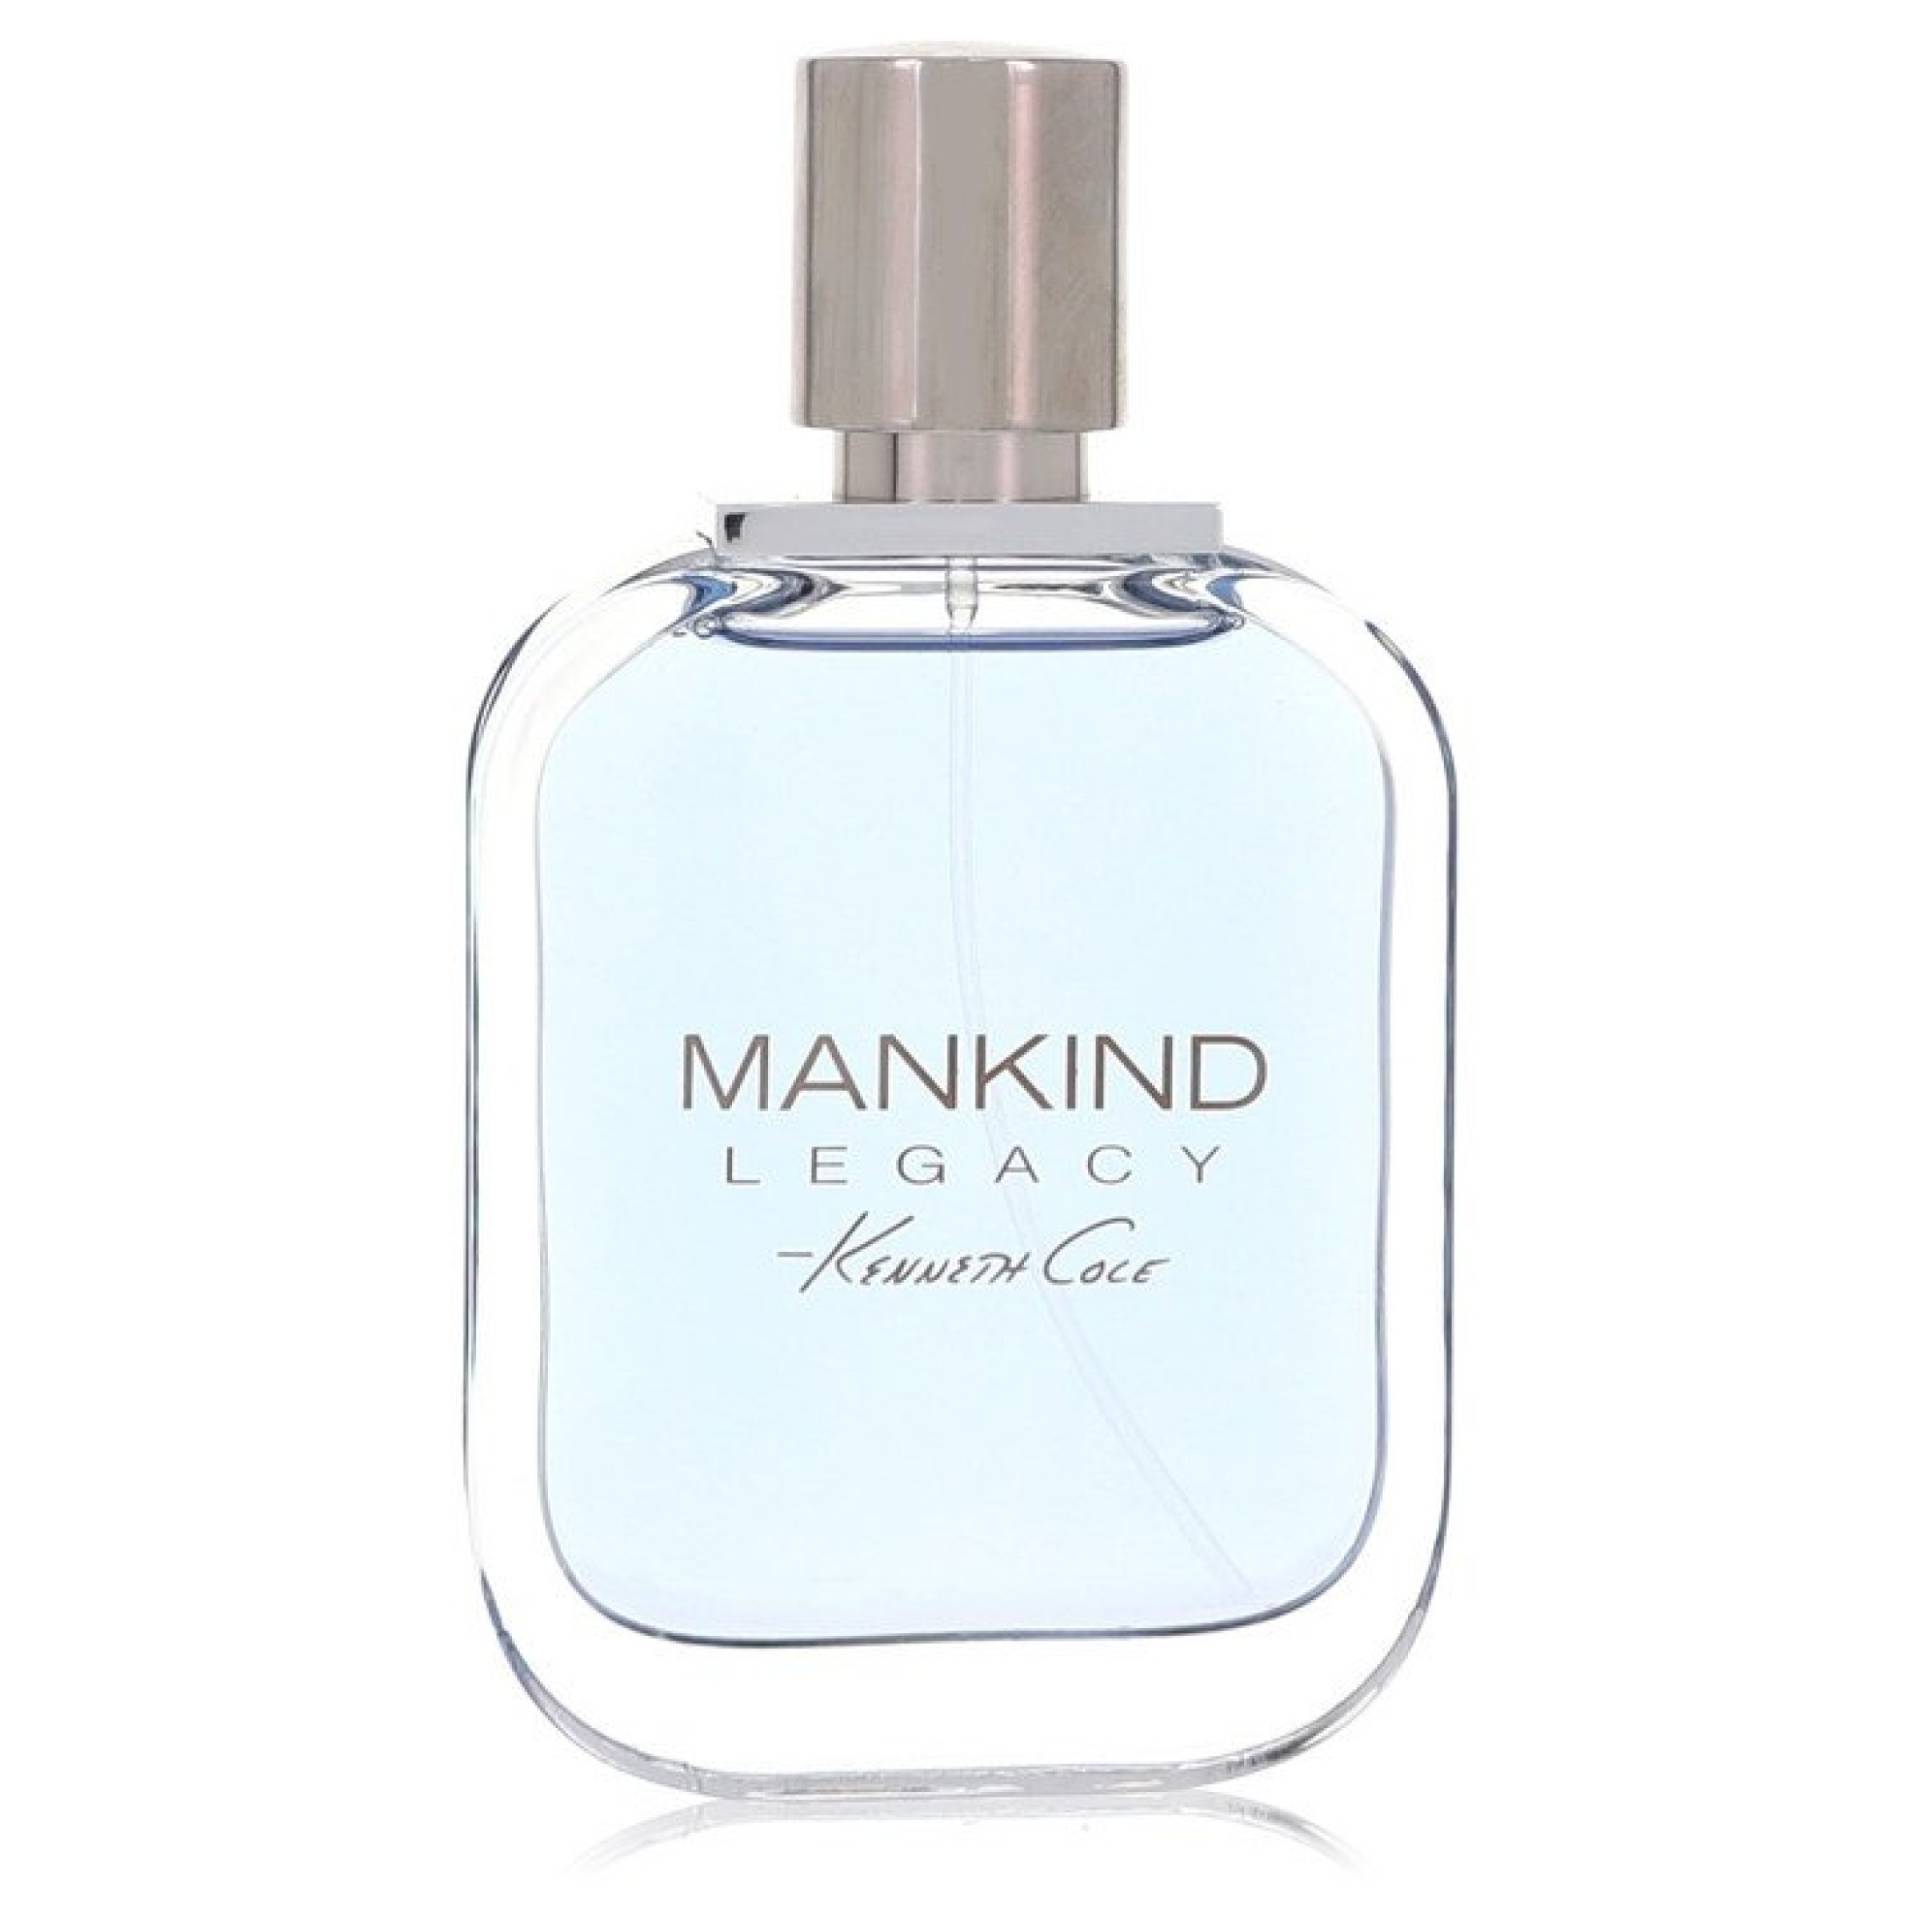 Kenneth Cole Mankind Legacy Eau De Toilette Spray (Unboxed) 100 ml von Kenneth Cole